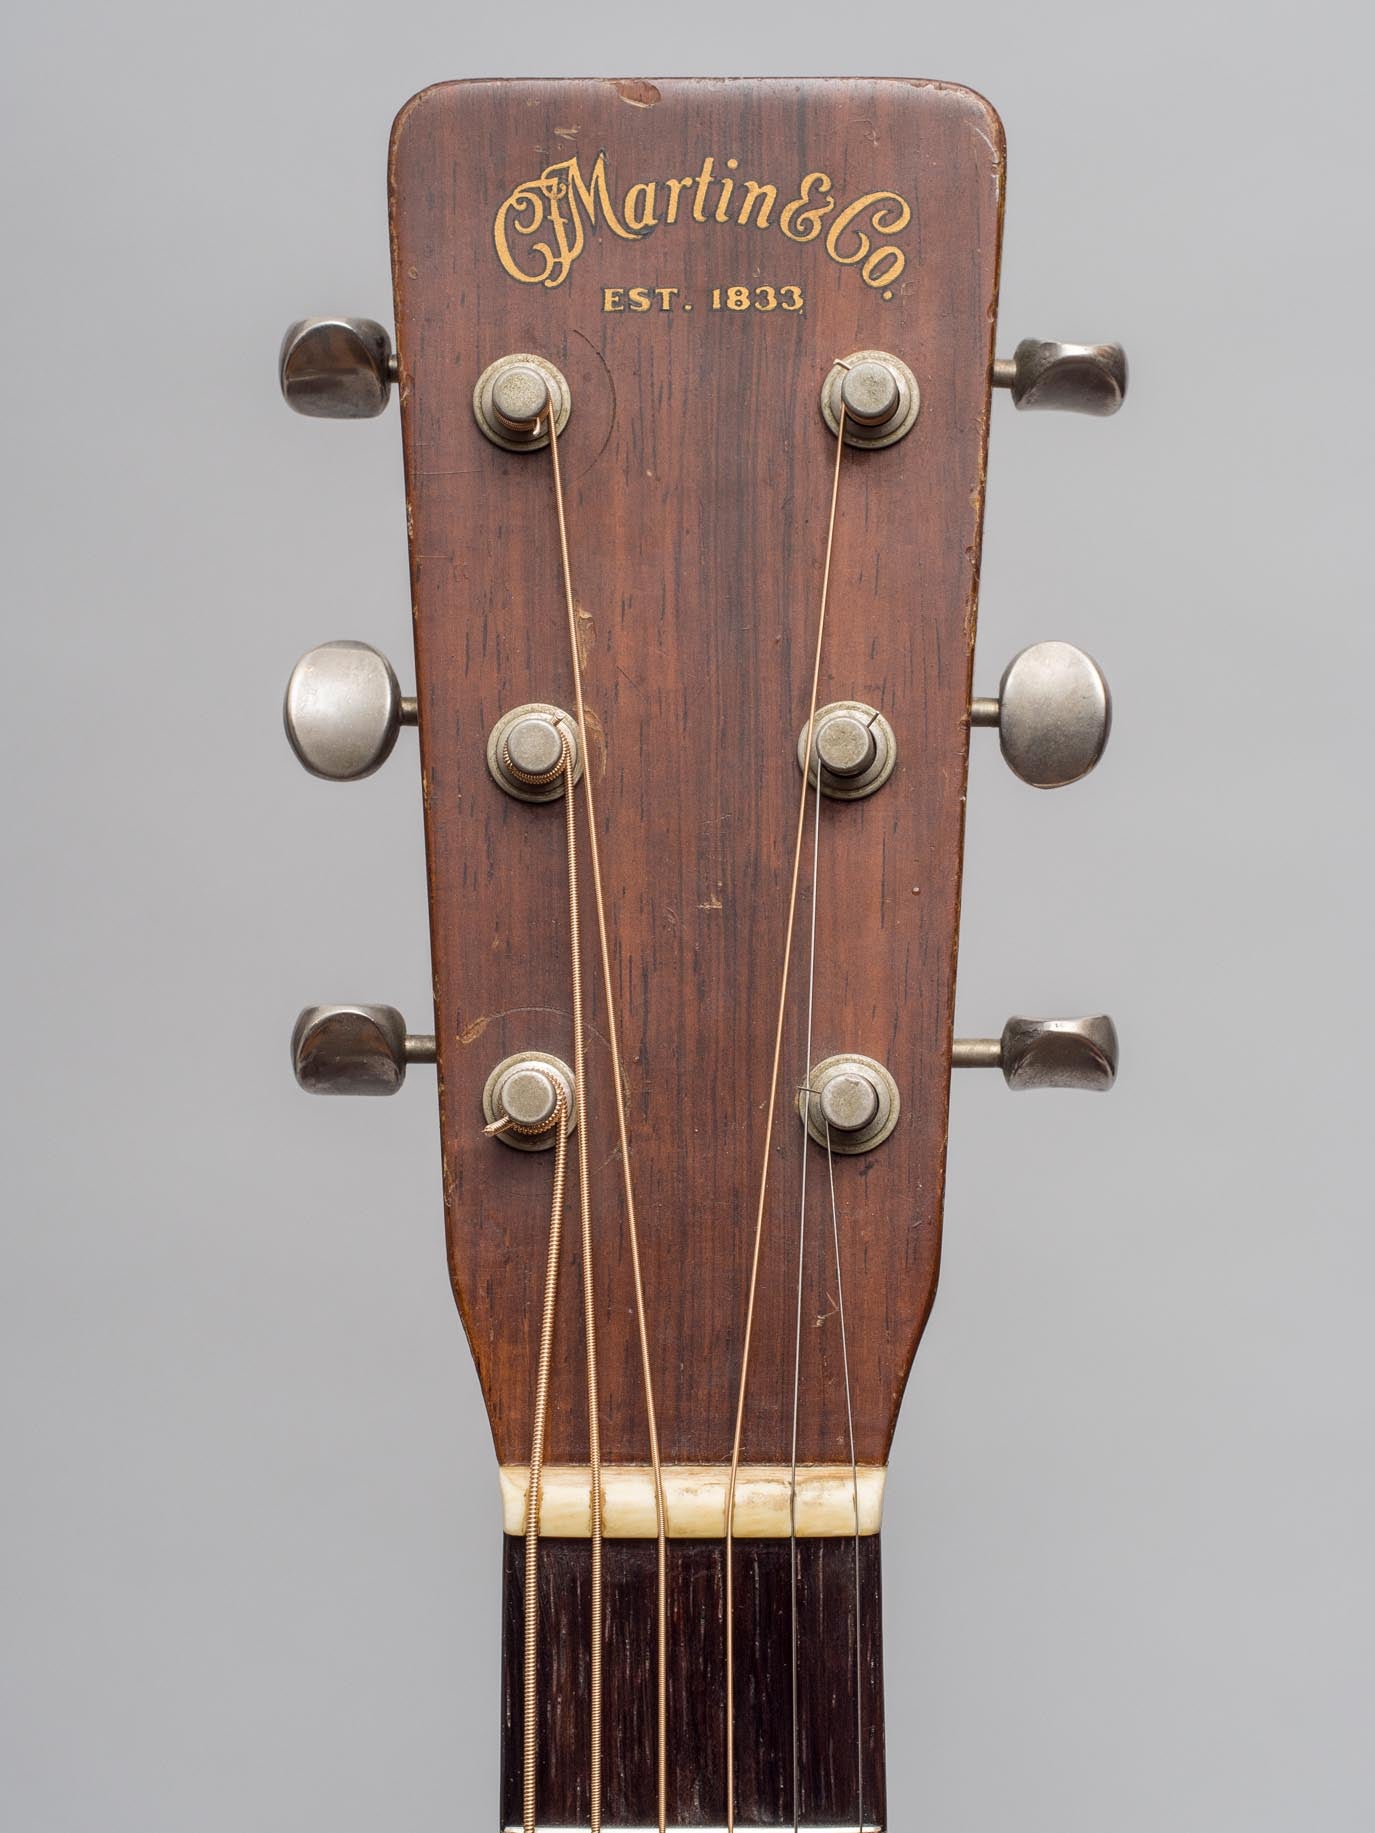 1953 Martin 000-18